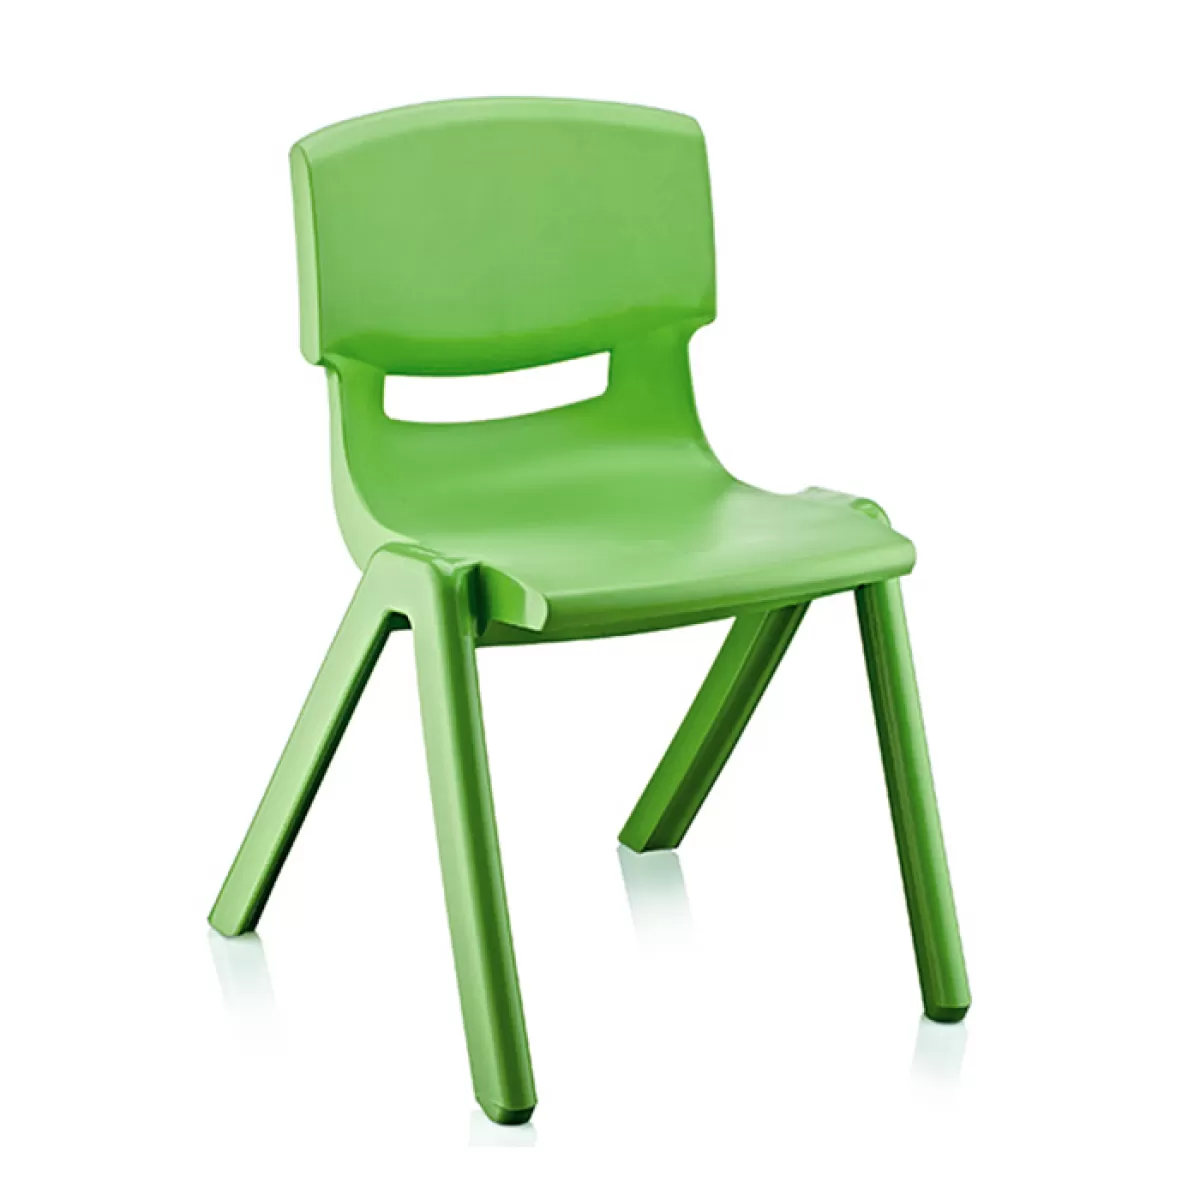 стул ребенка зеленого цвета